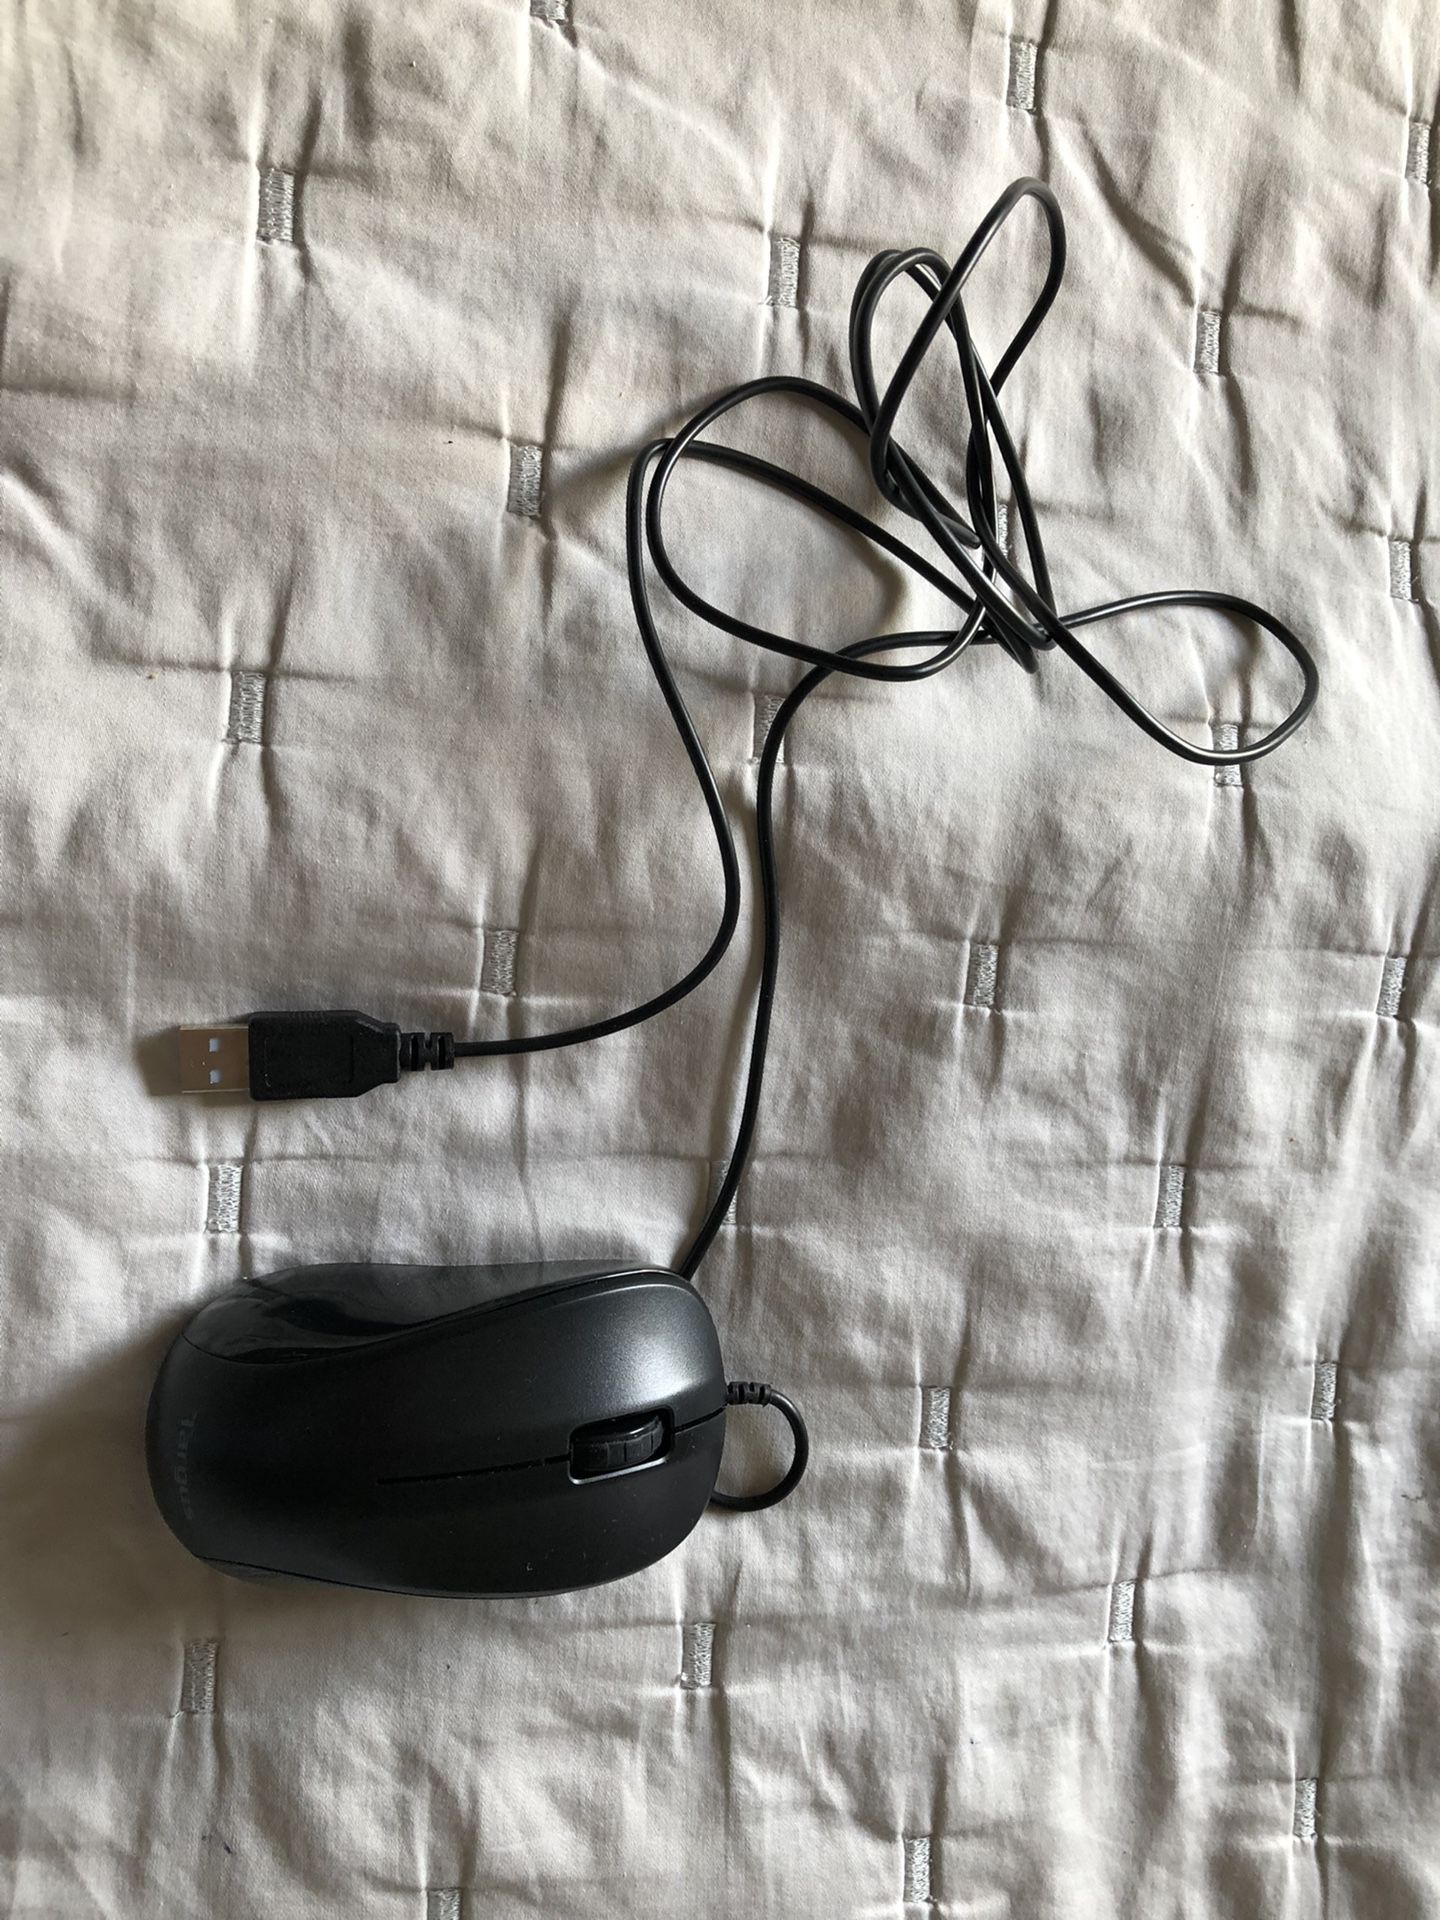 USB Optical Laptop Mouse